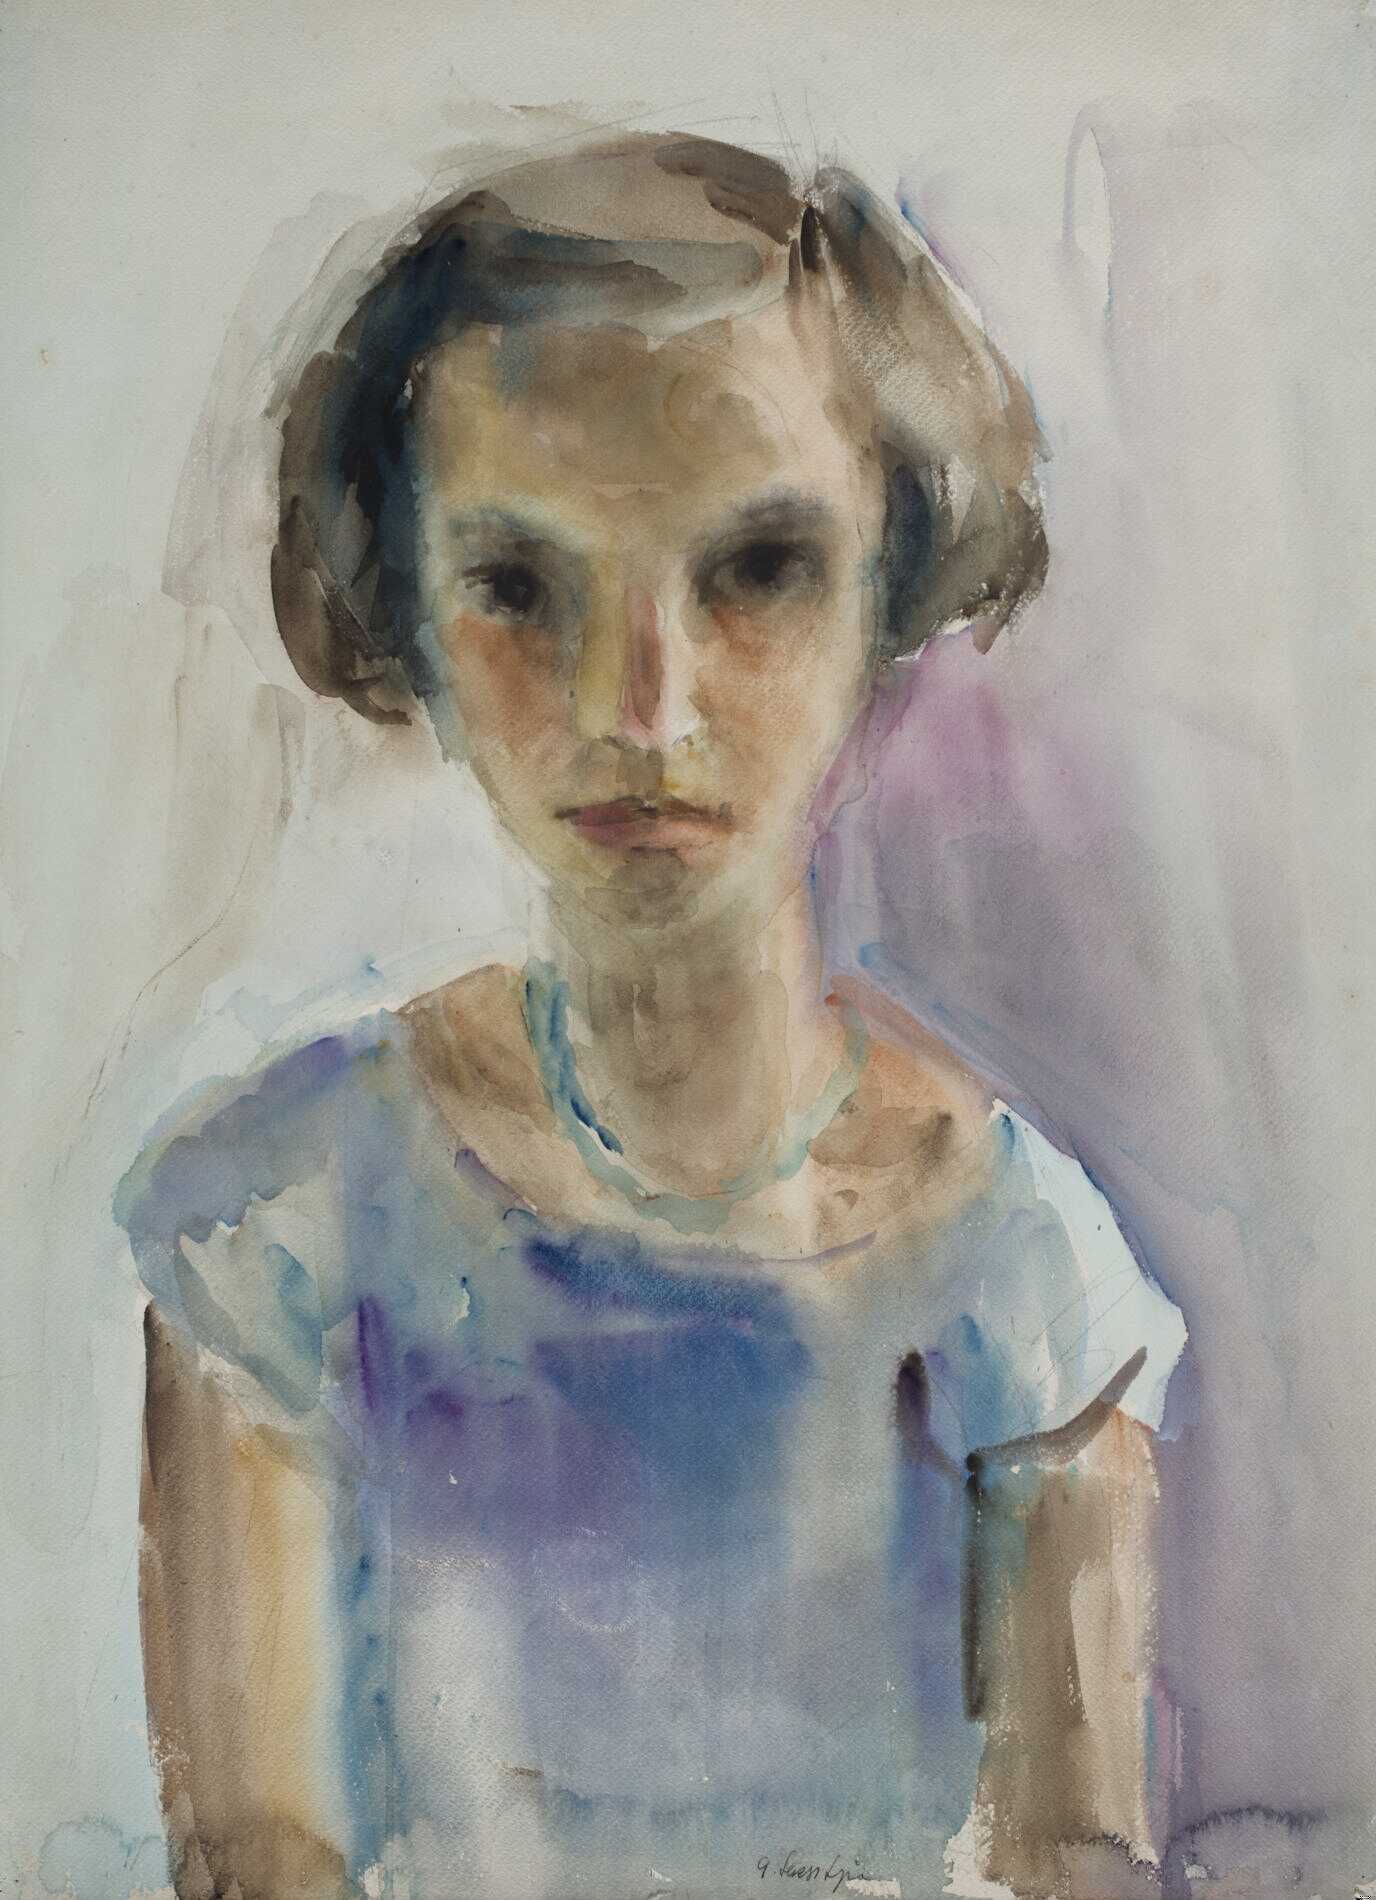 Portrait of a Girl by Gela Seksztajn - 1932-1943? - 55.3 x 43.3 cm Jewish Historical Institute